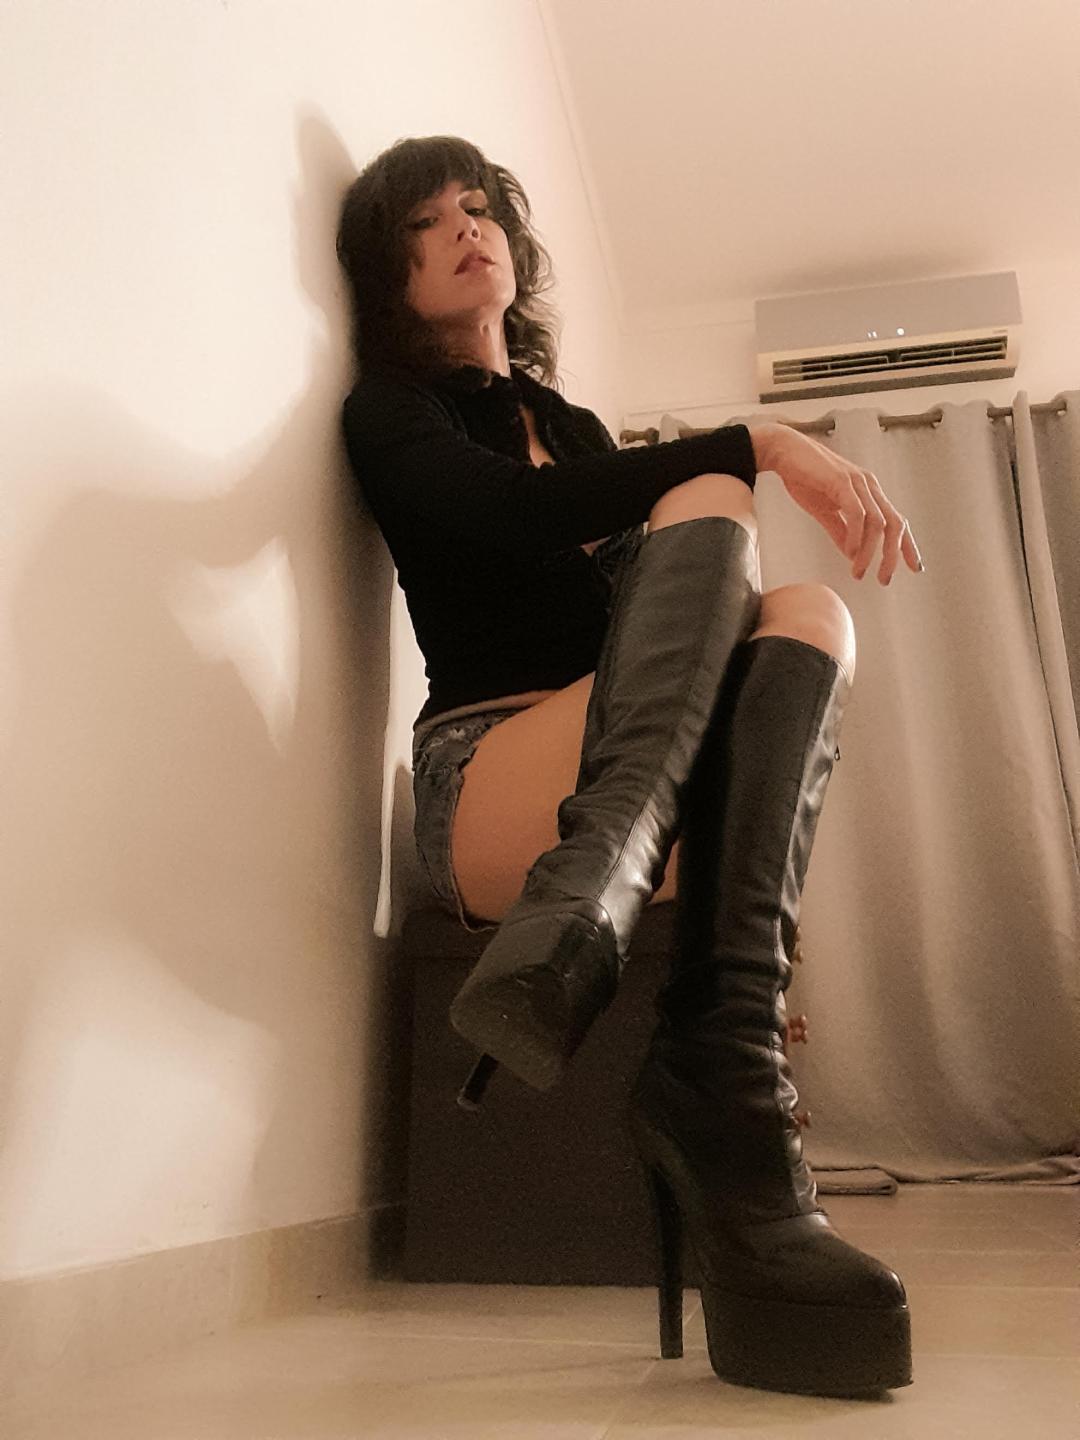 Image of cam model Aiyana from XloveCam